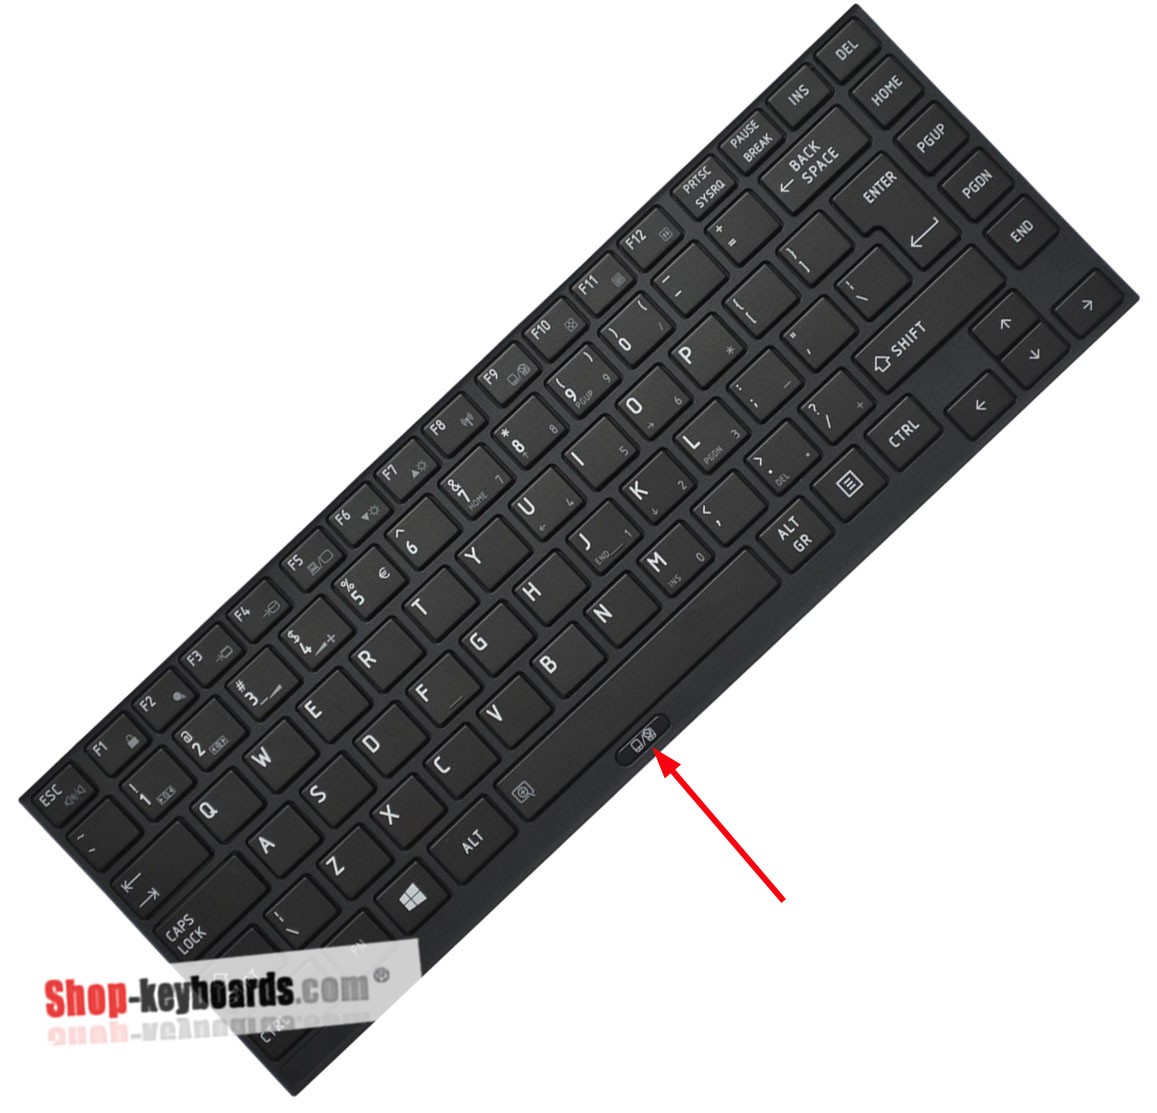 Toshiba Satellite R835-P83  Keyboard replacement